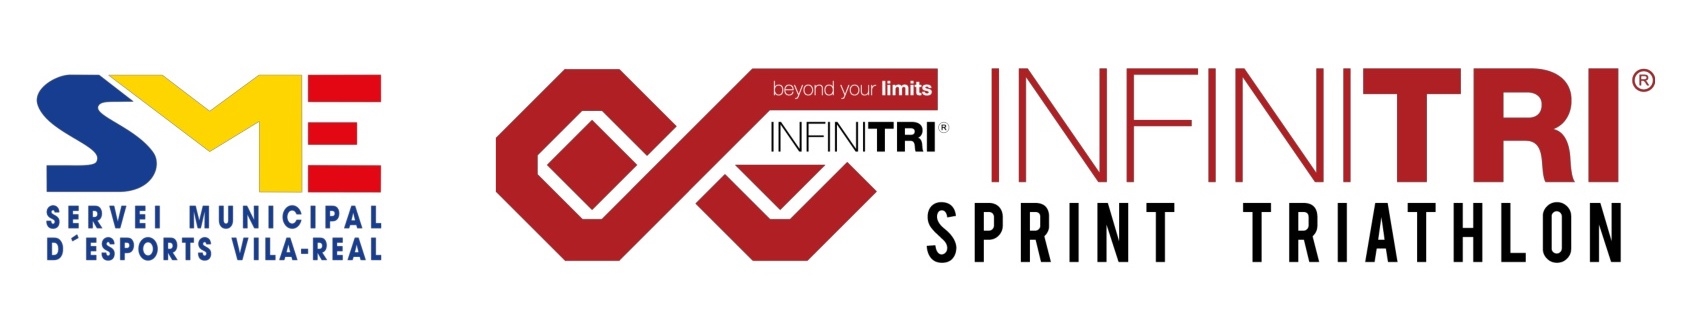 V Infinitri Sprint Triathlon Vila-real